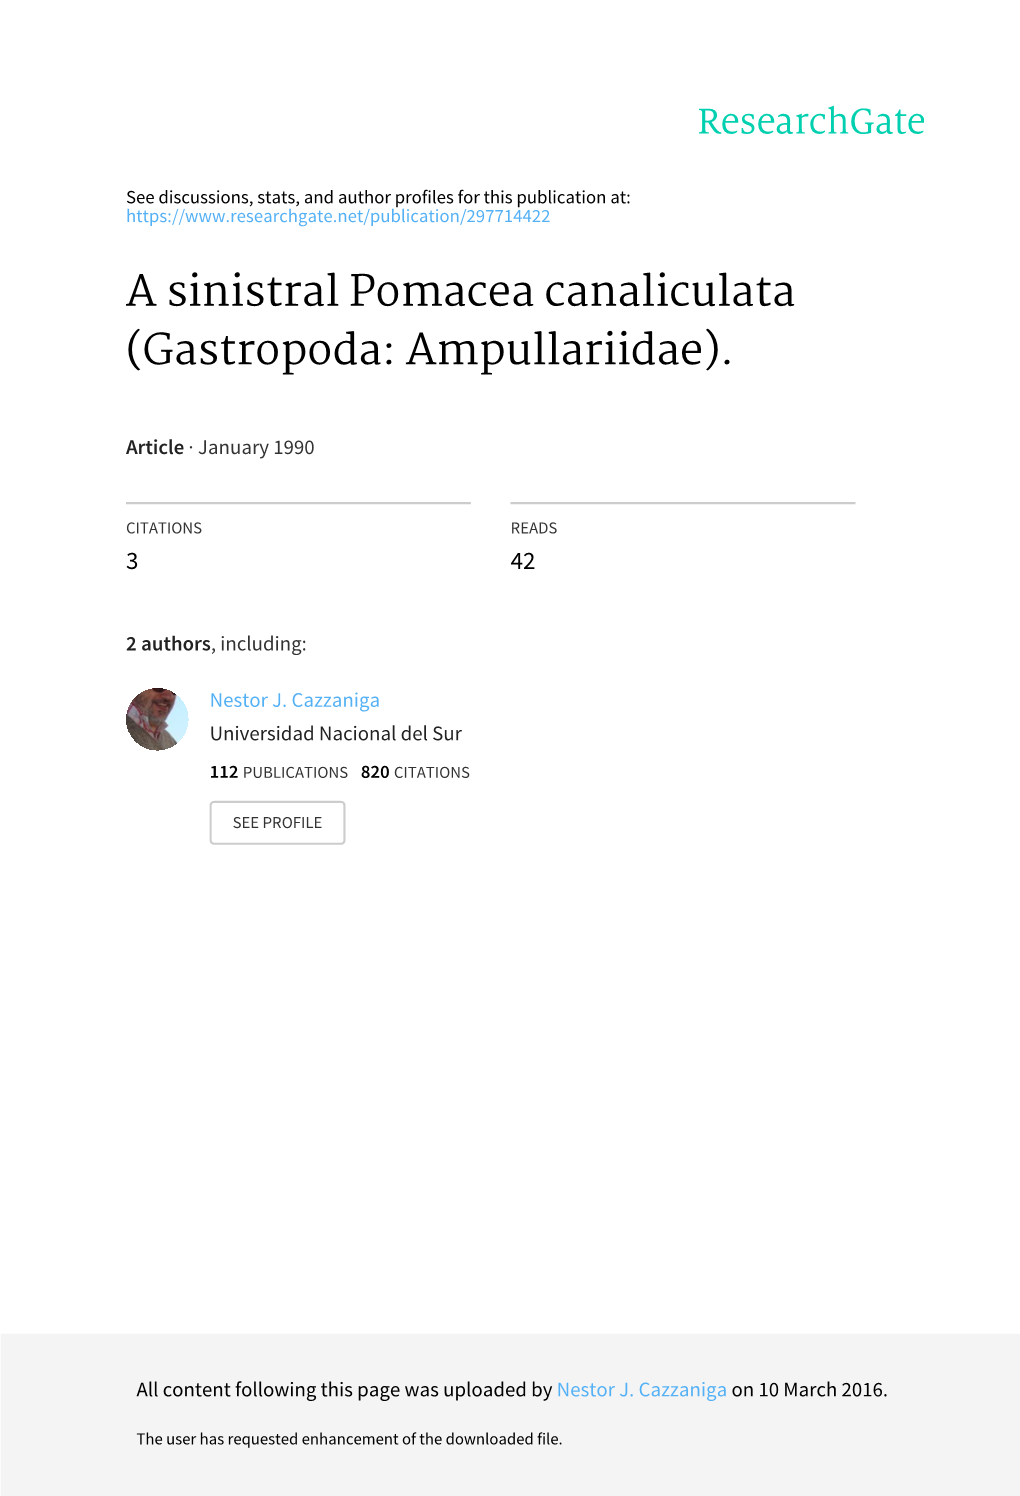 A Sinistral Pomacea Canaliculata (Gastropoda: Ampullariidae)